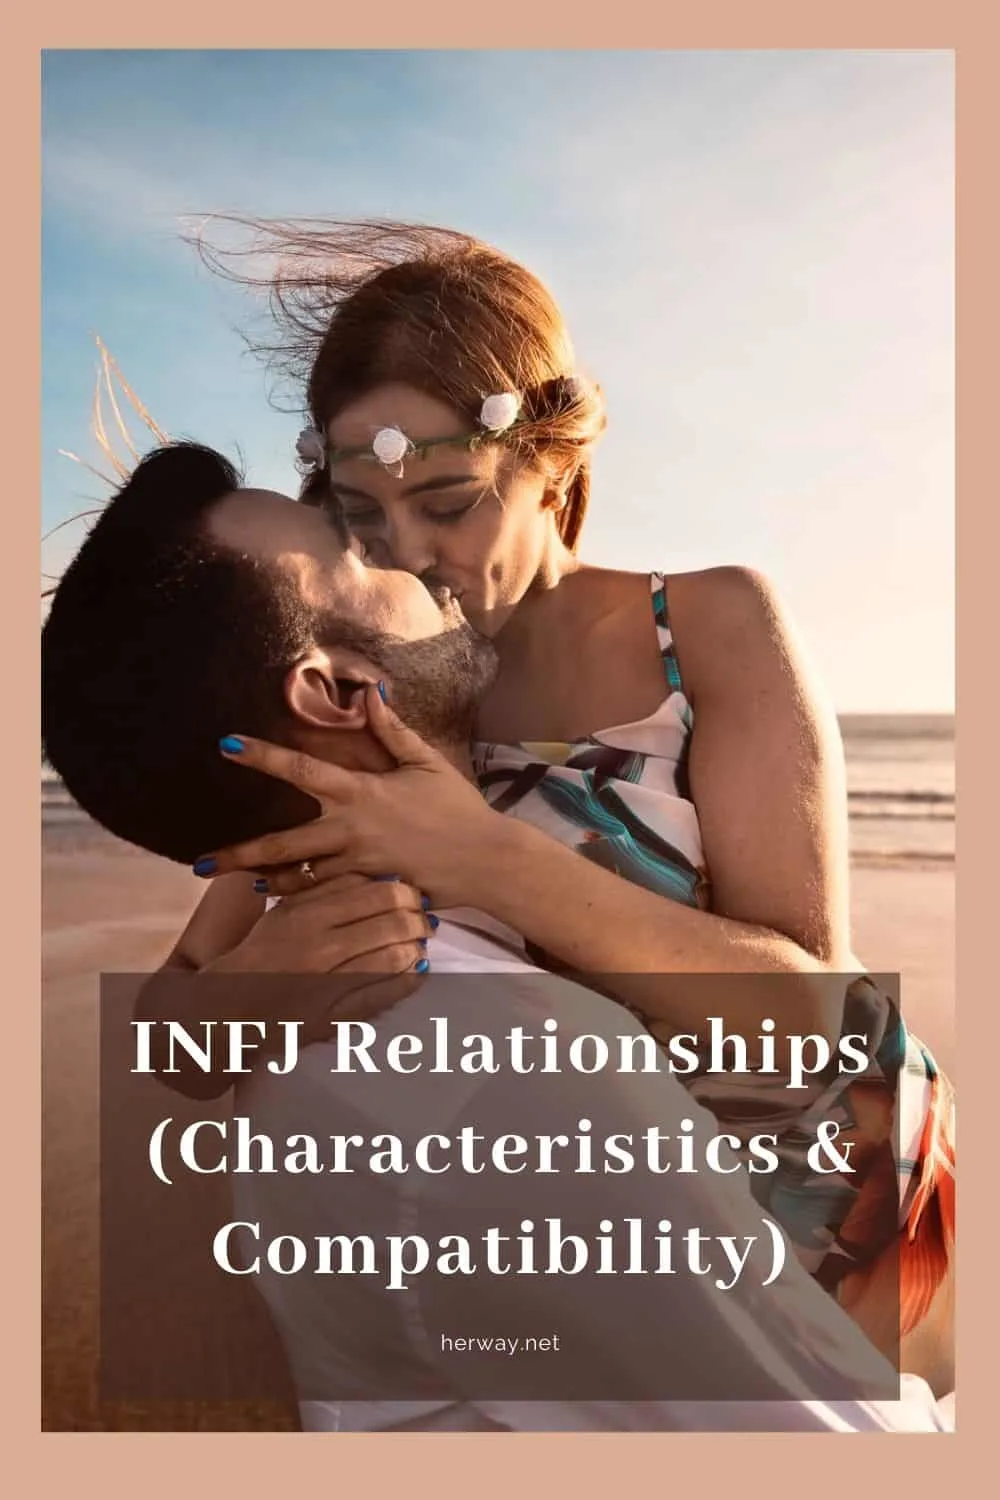 INFJ Relationships (Characteristics & Compatibility)